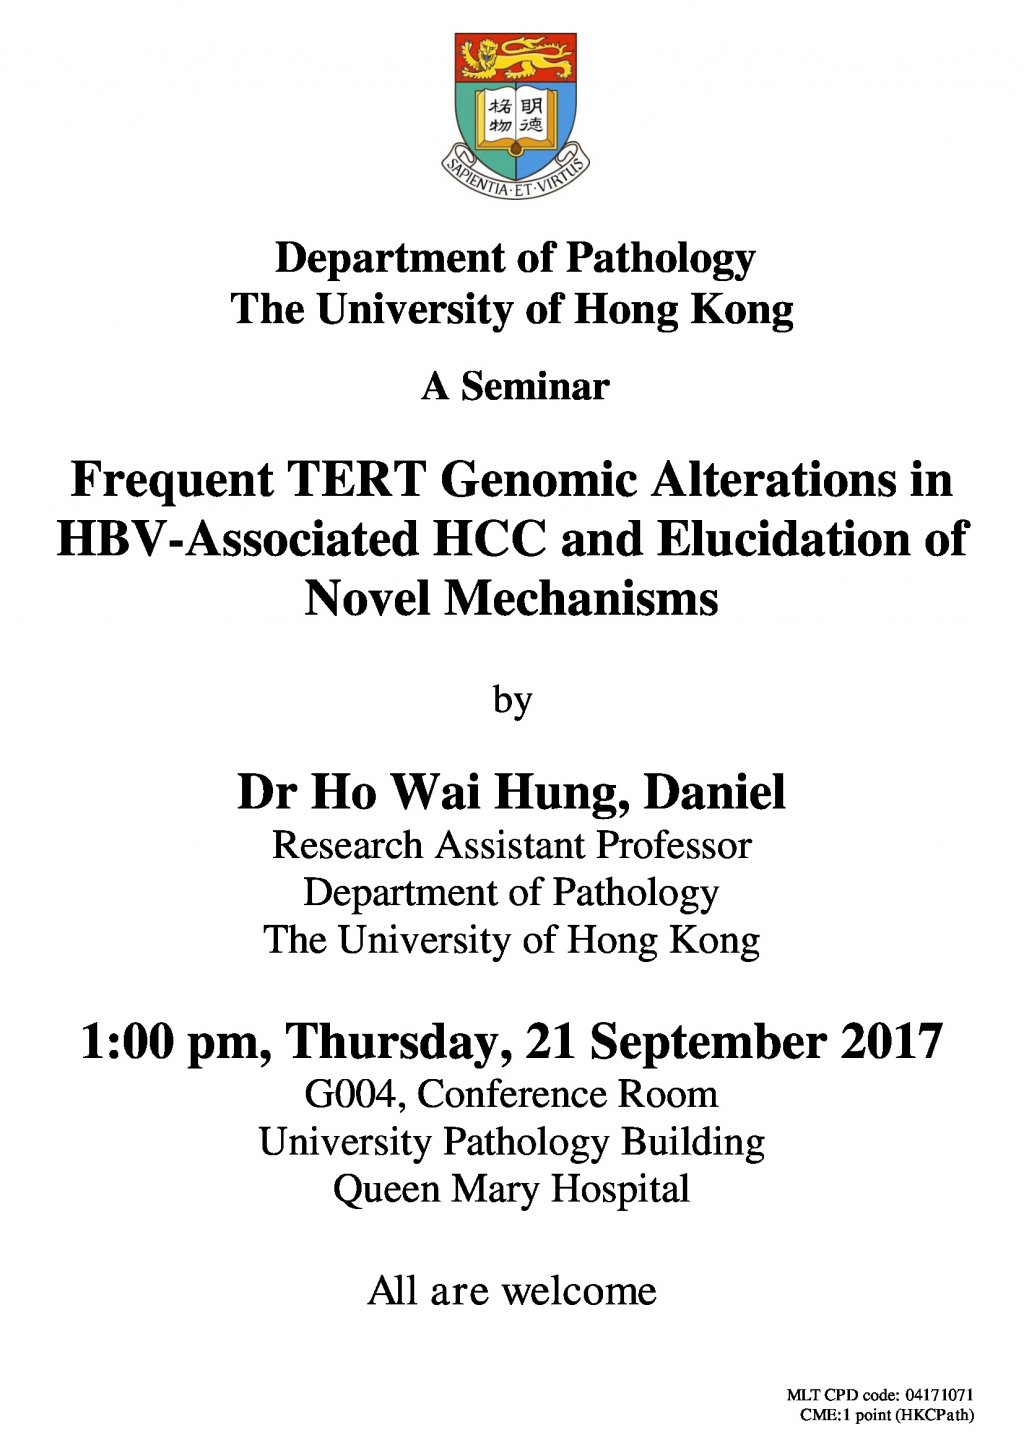 A Seminar by Dr Ho Wai Hung, Daniel on 21 Sep (1pm)